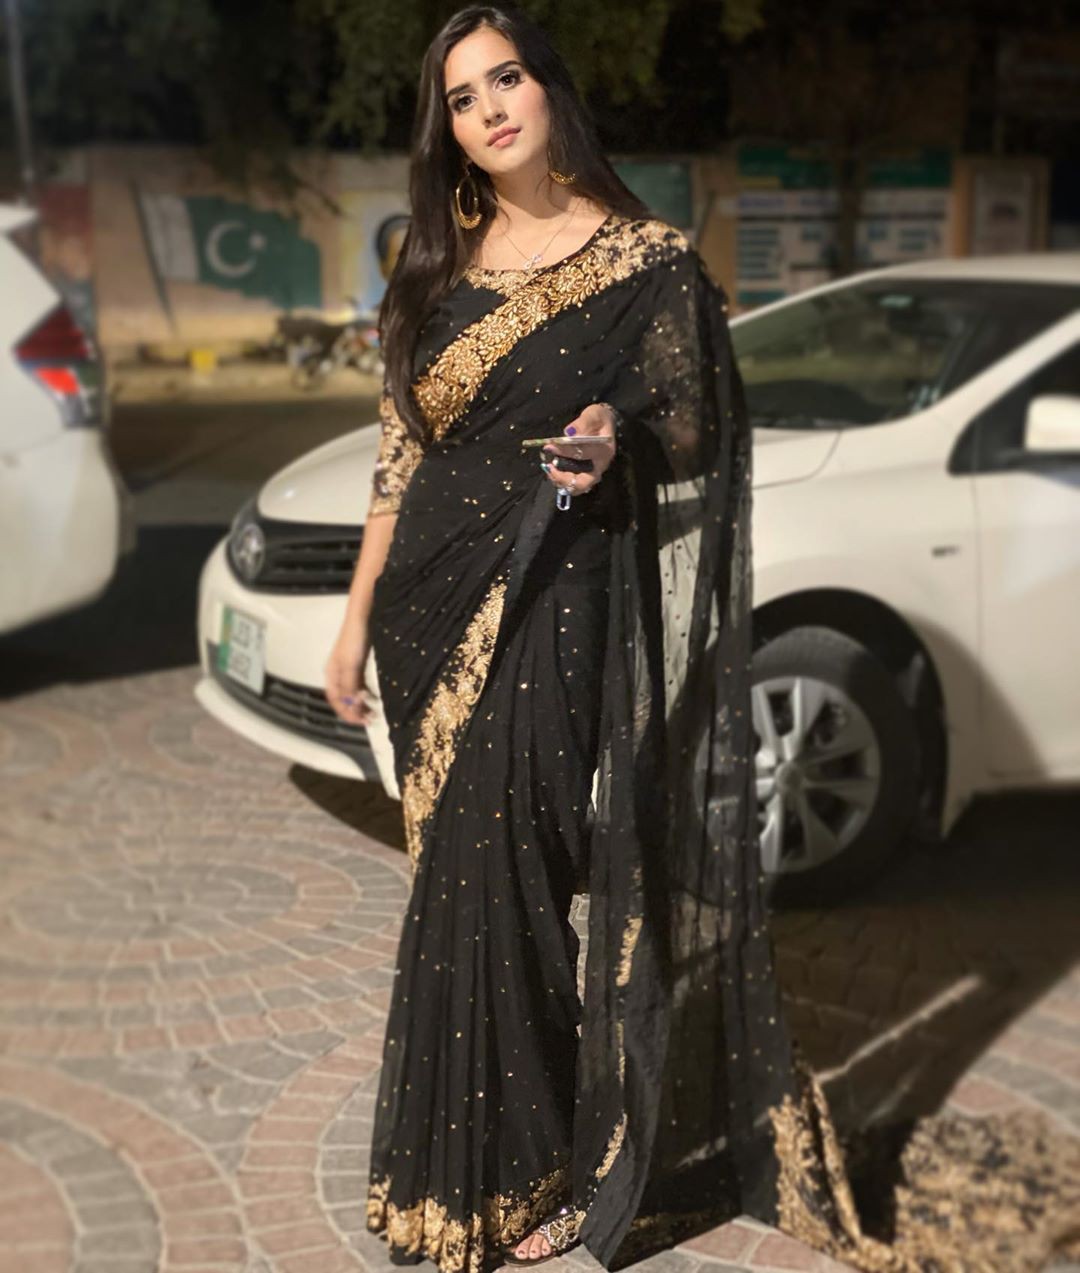 Alishbah Anjum dress formal wear, blouse, sari colour outfit: Formal wear,  Alishbah Anjum Instagram  